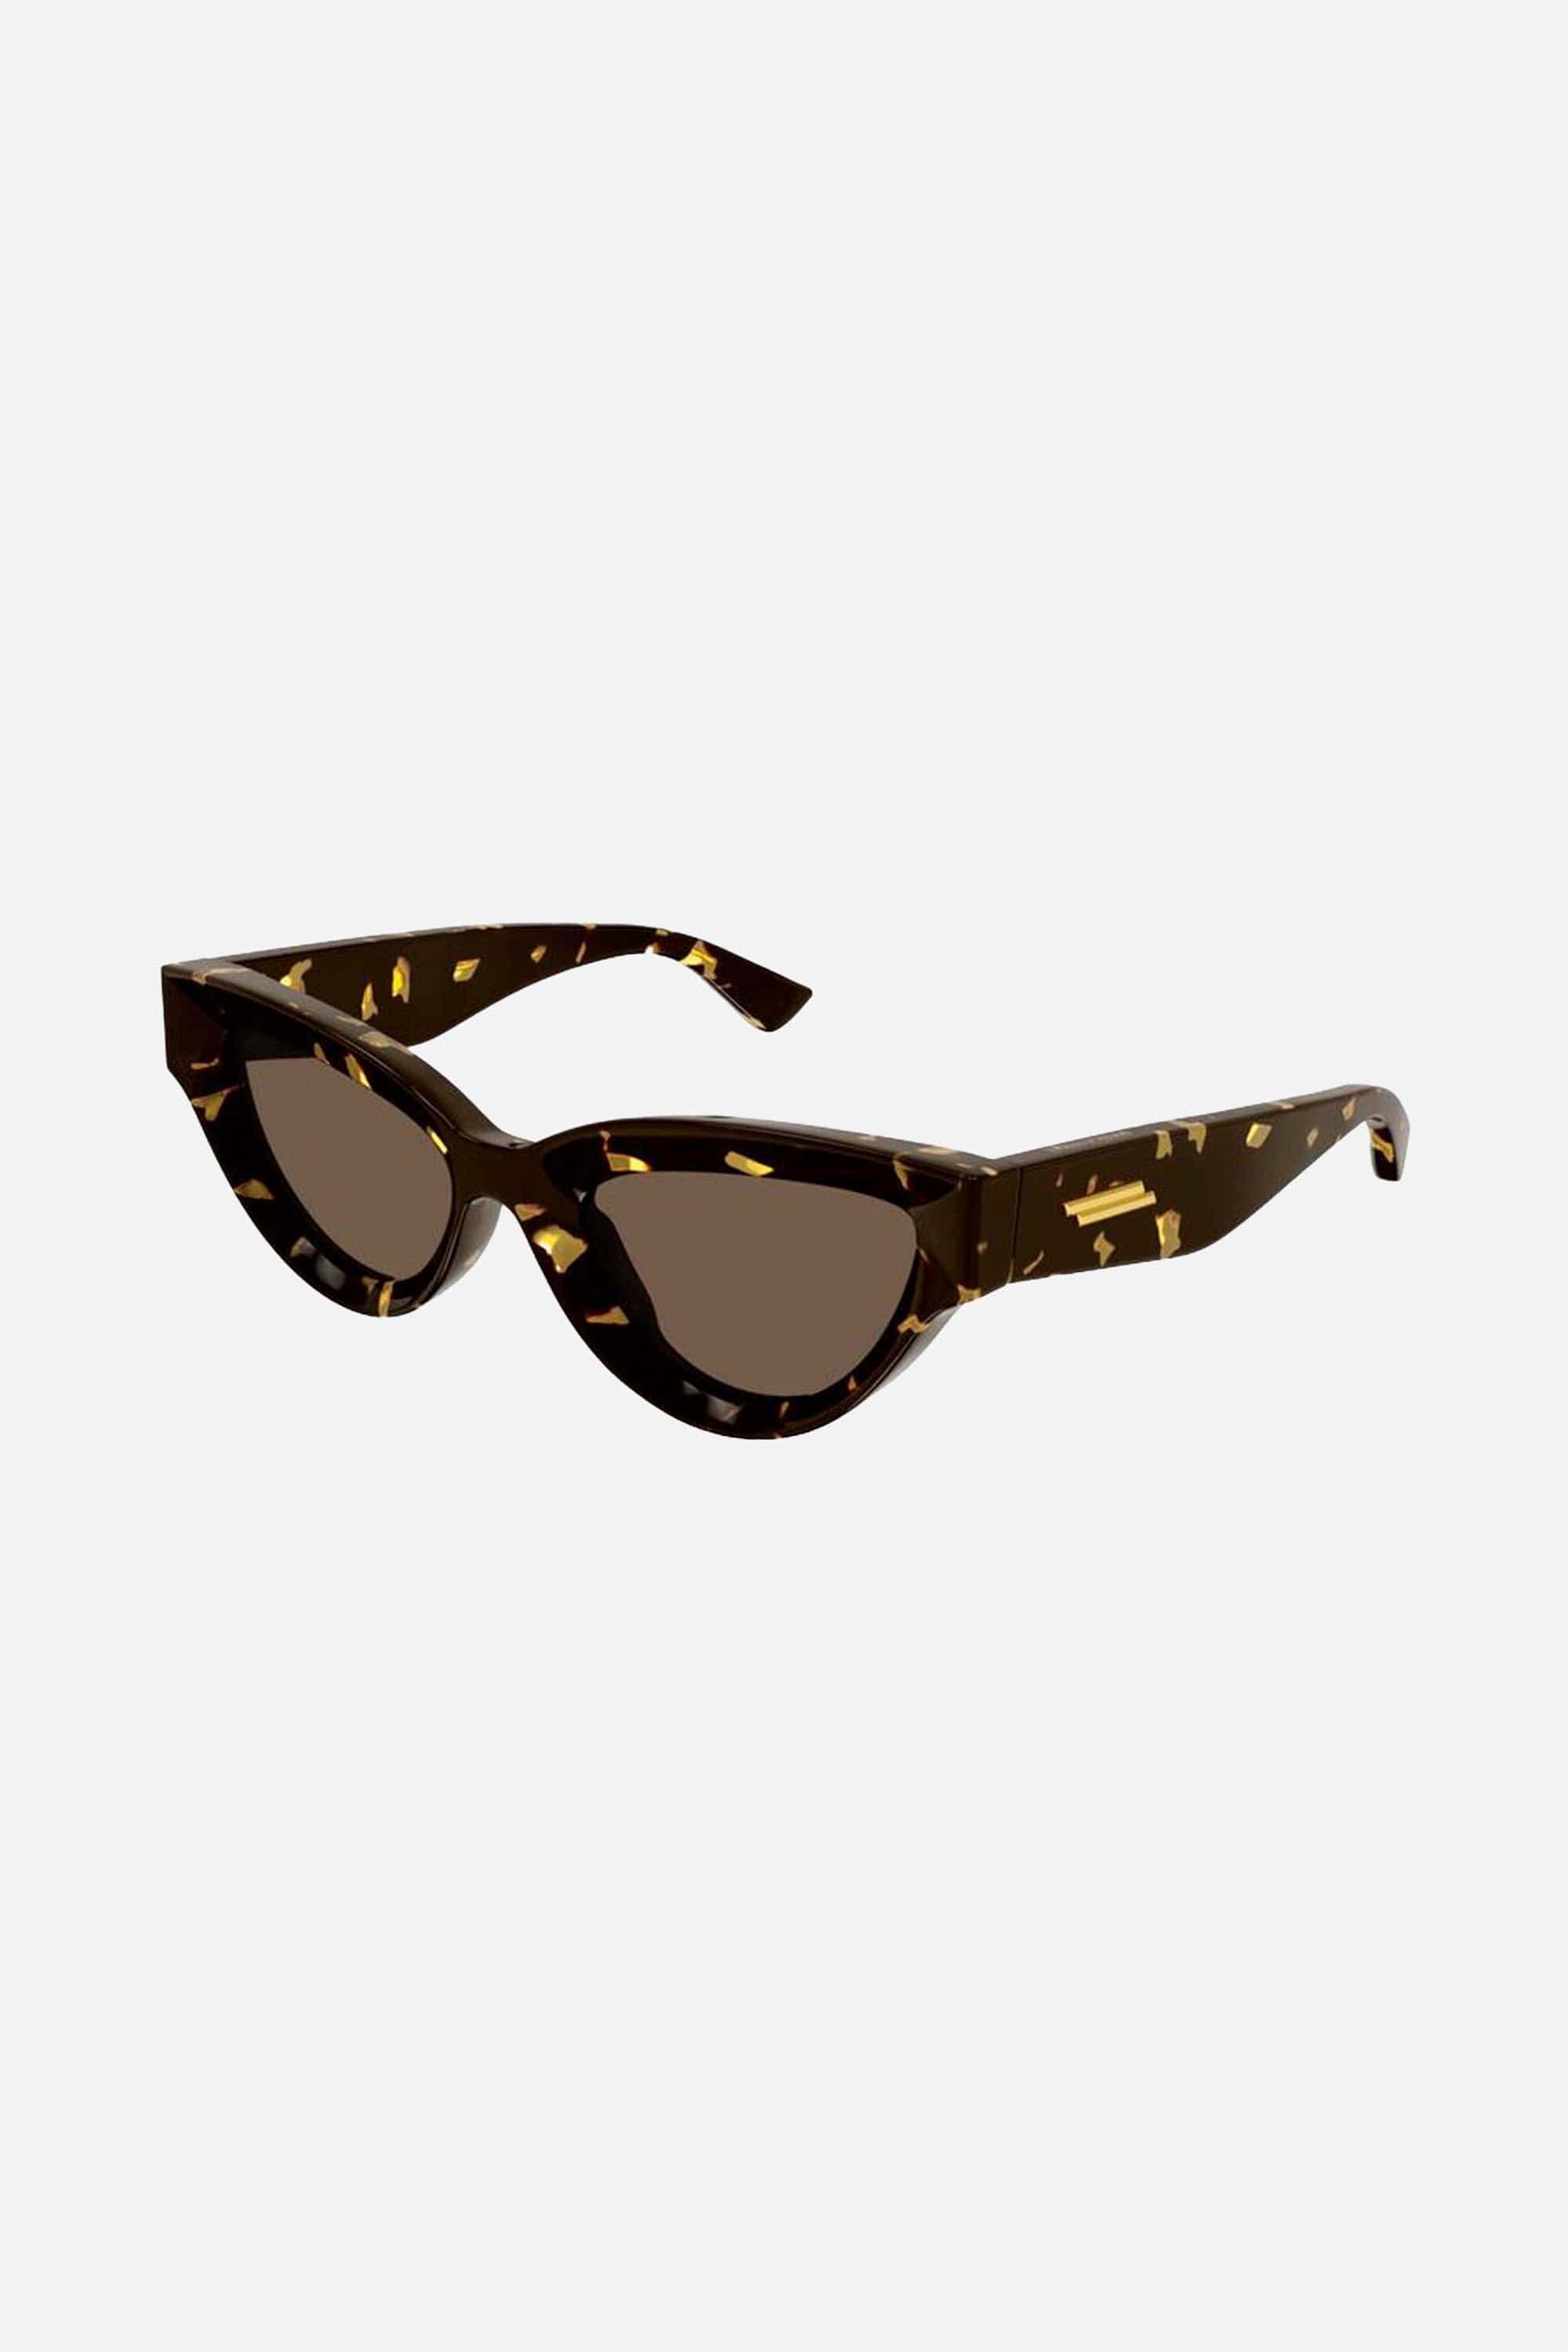 Bottega Veneta angular havana sunglasses - Eyewear Club